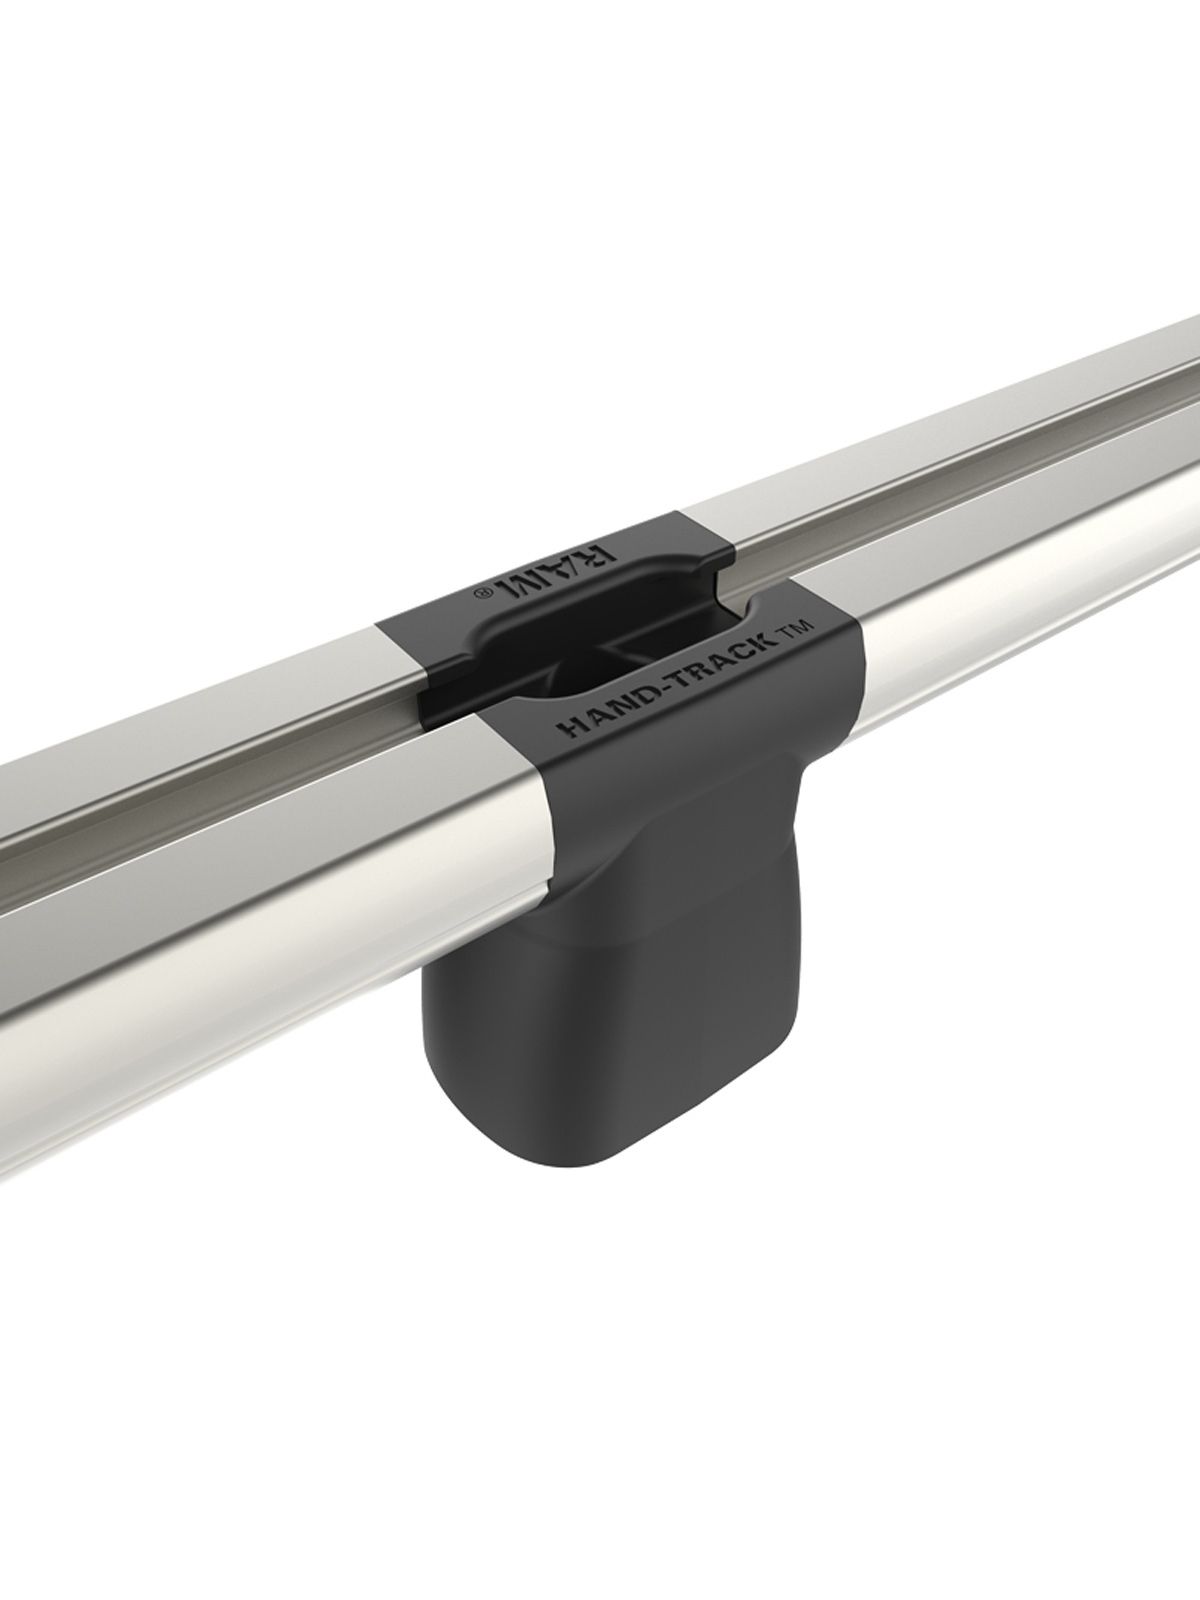 RAM Mounts Hand-Track Erweiterung - Aluminium-Schiene inkl. Steckverbindung, Innenlänge 381 mm (15 Zoll), eloxiert